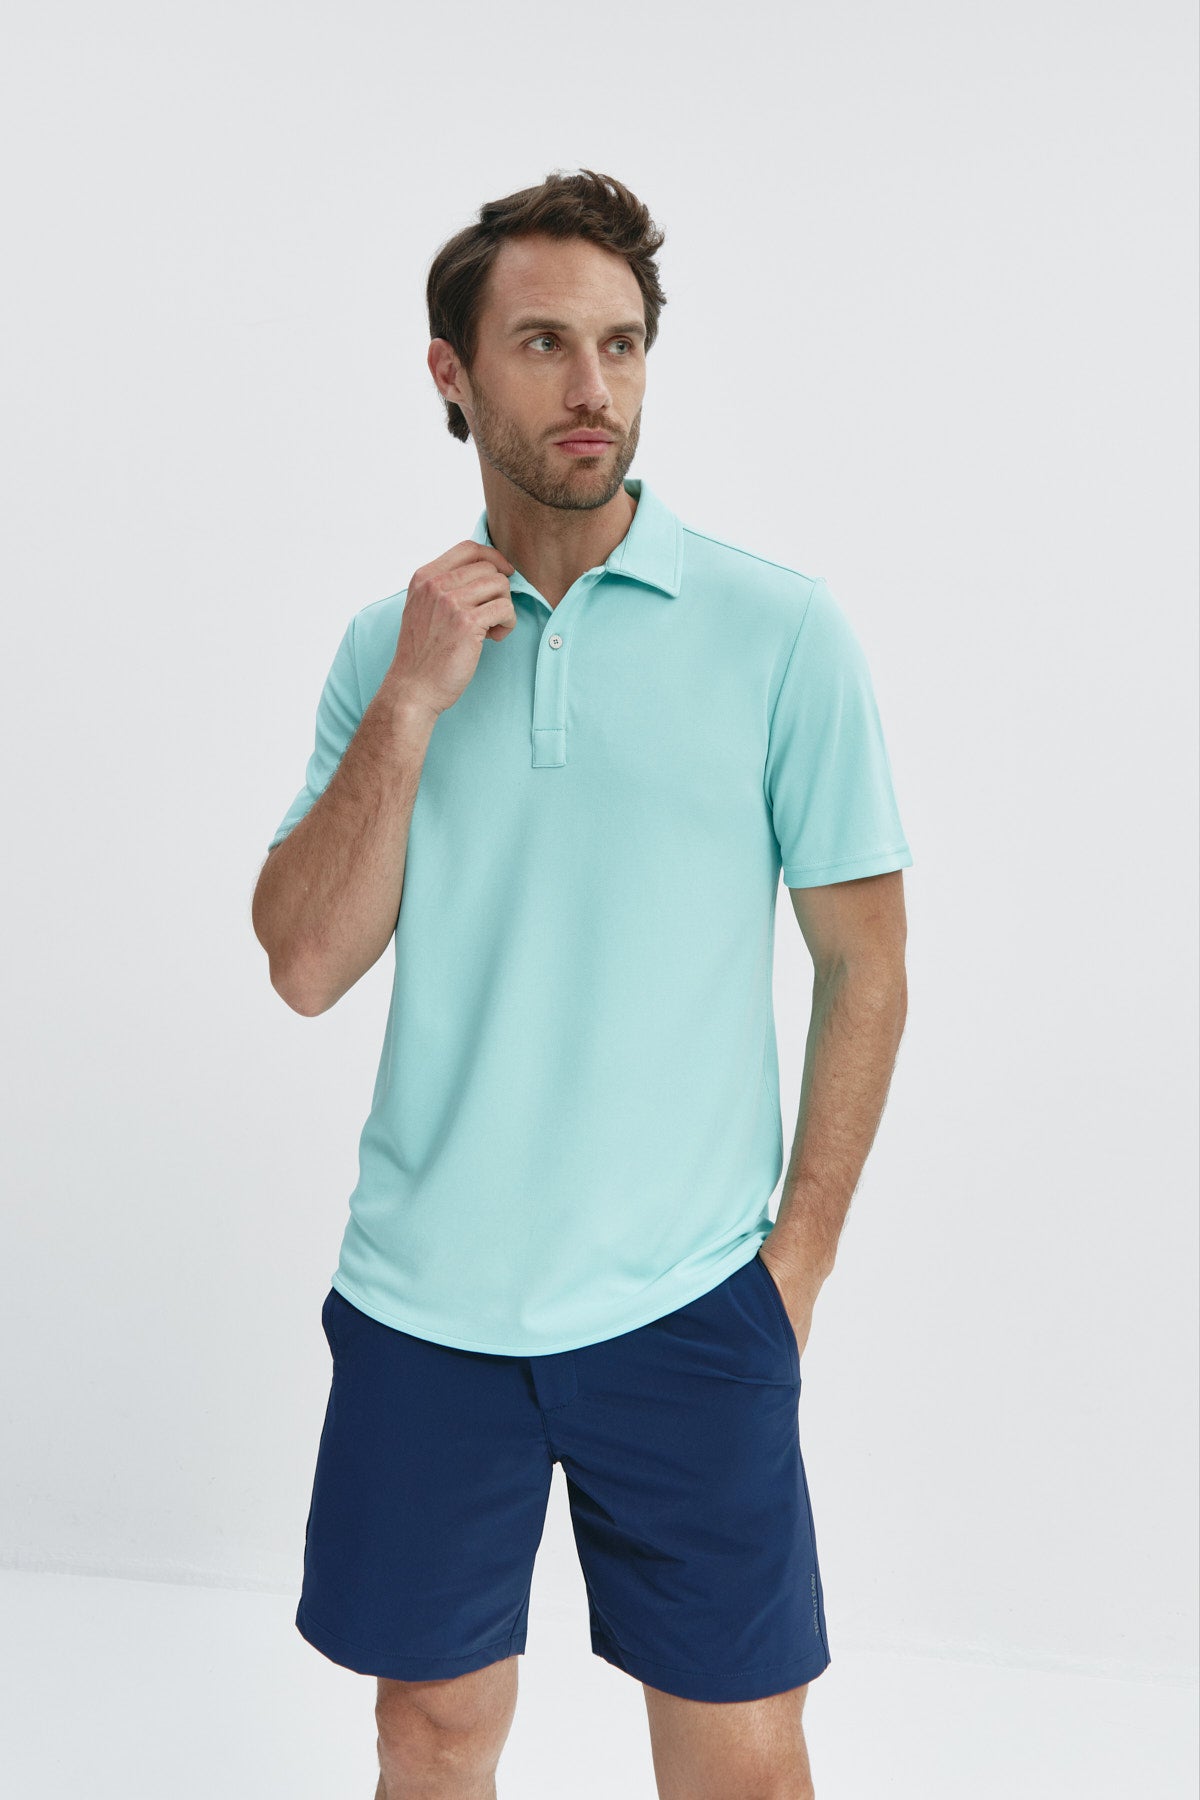 Men's aqua blue ICE short sleeve polo shirt